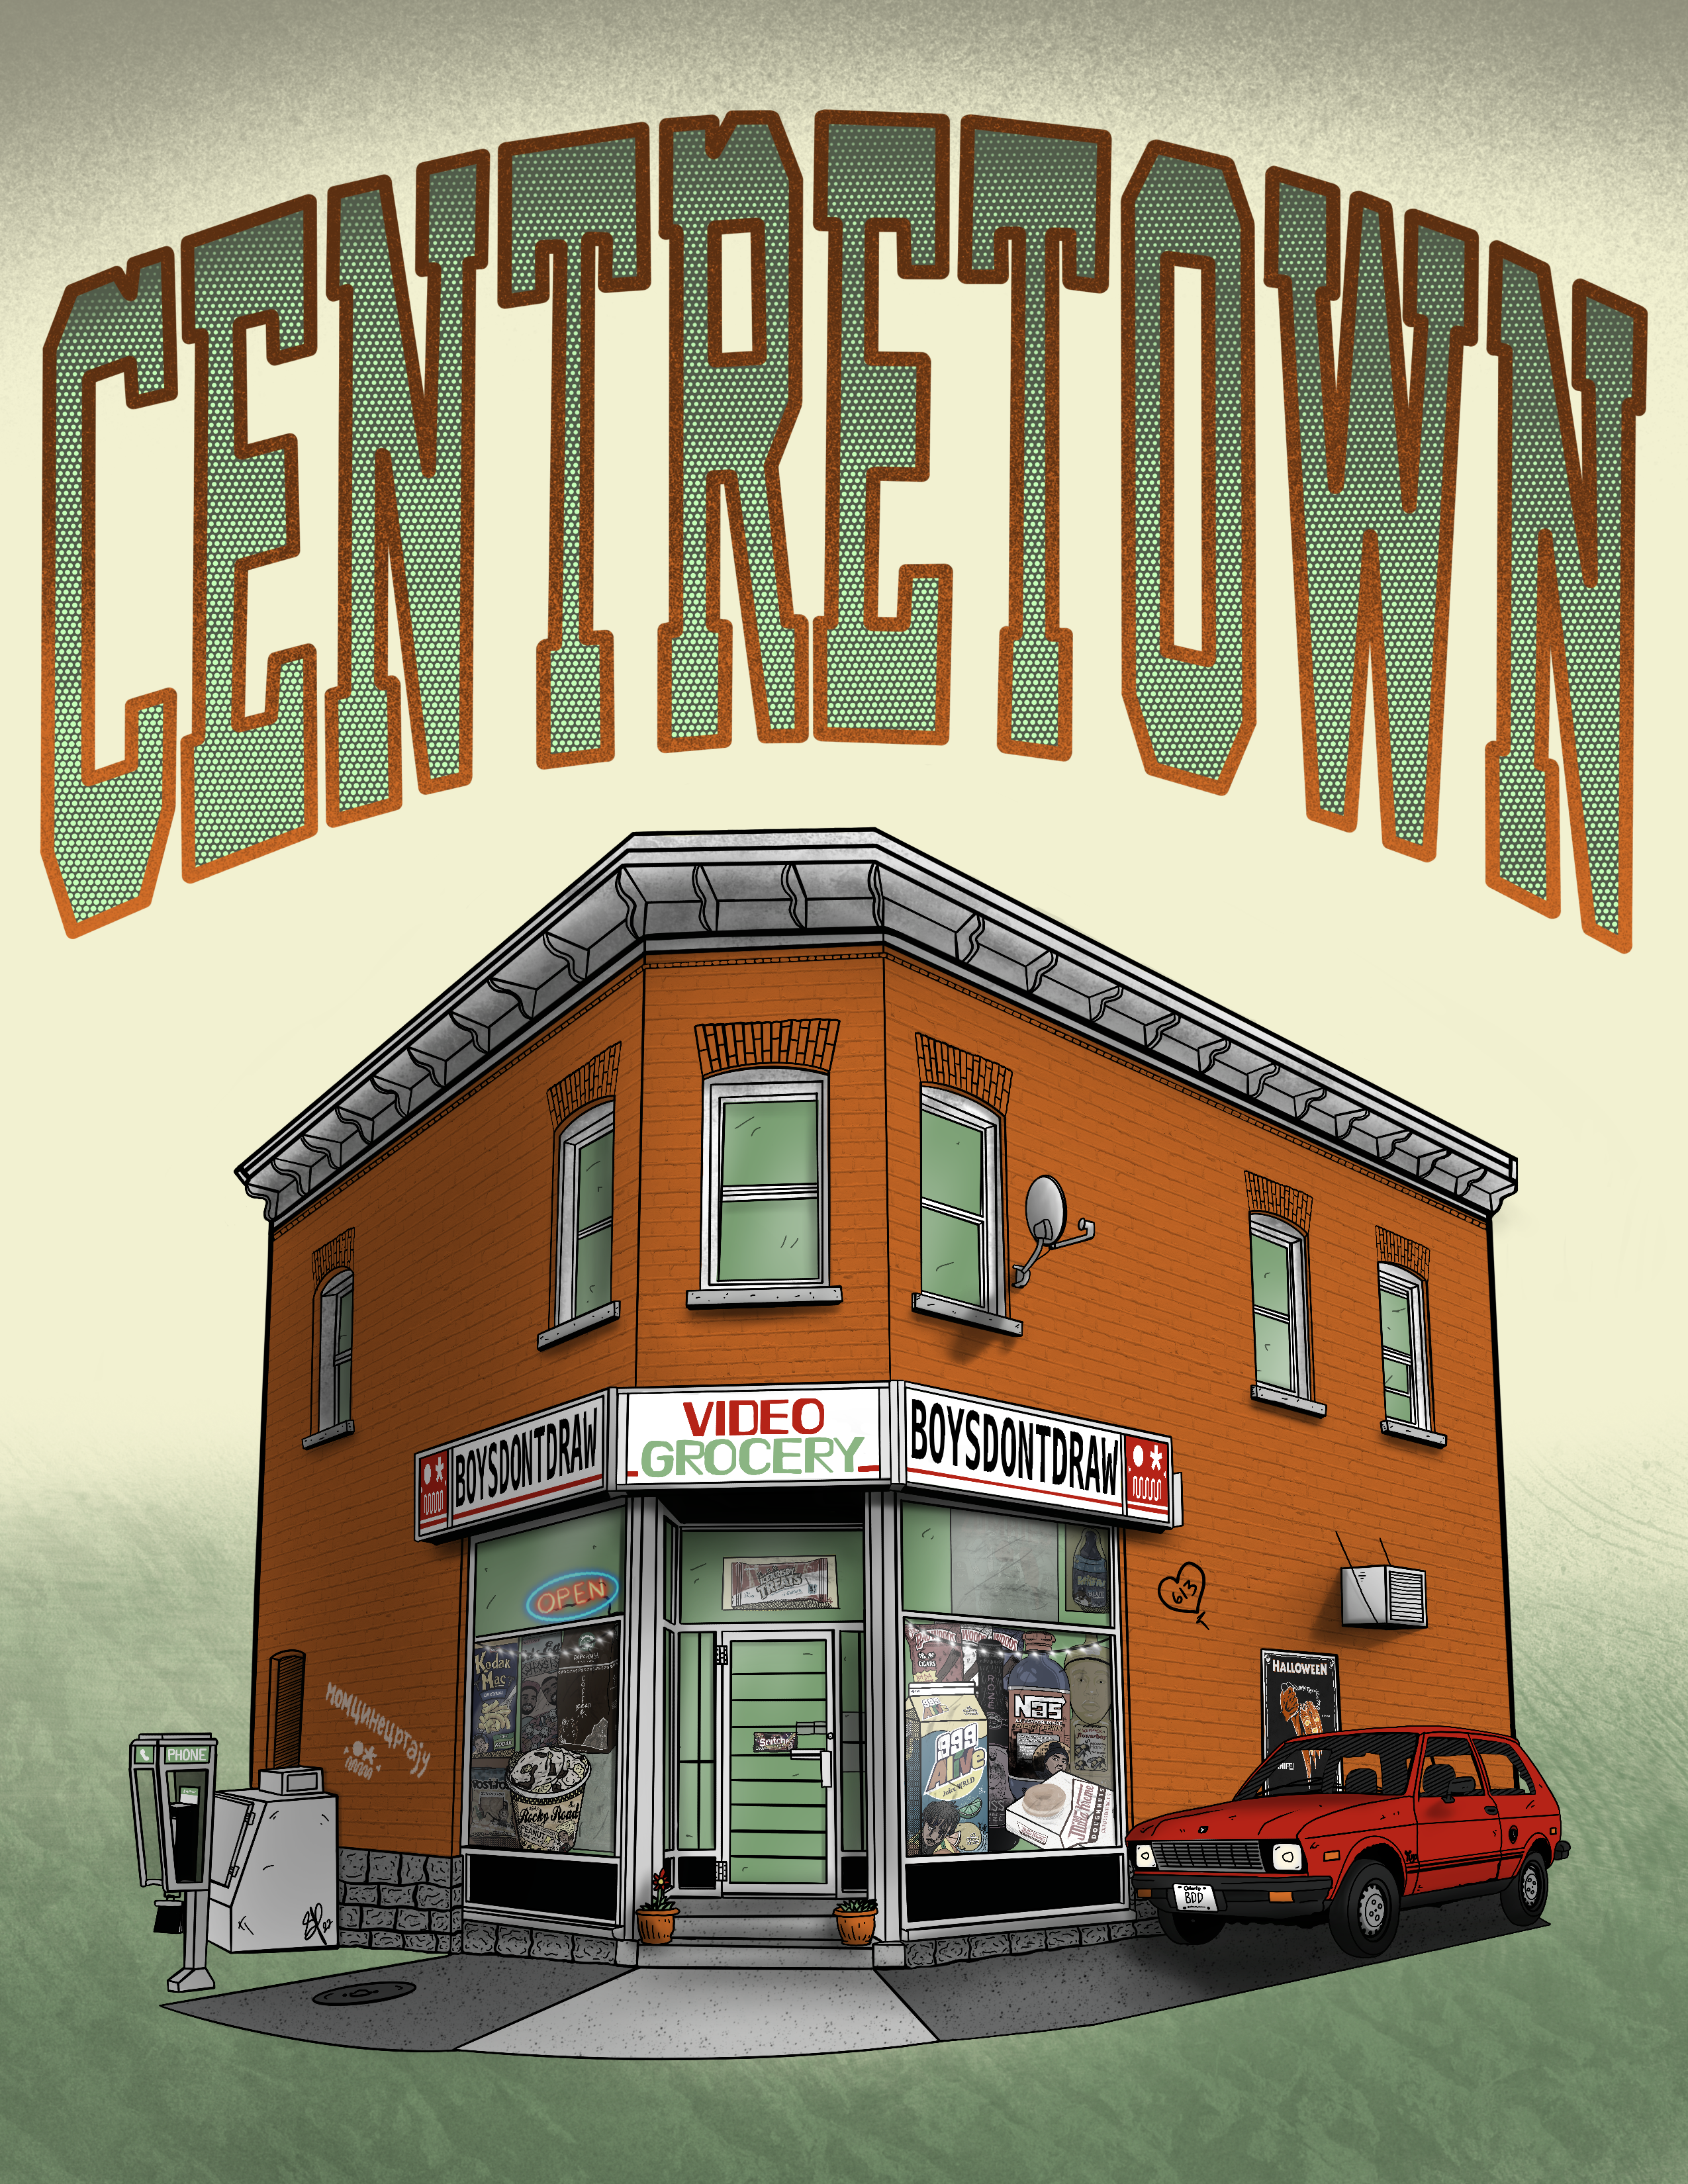 CENTRETOWN* // OTTAWA - Limited Poster by BOYSDONTDRAW